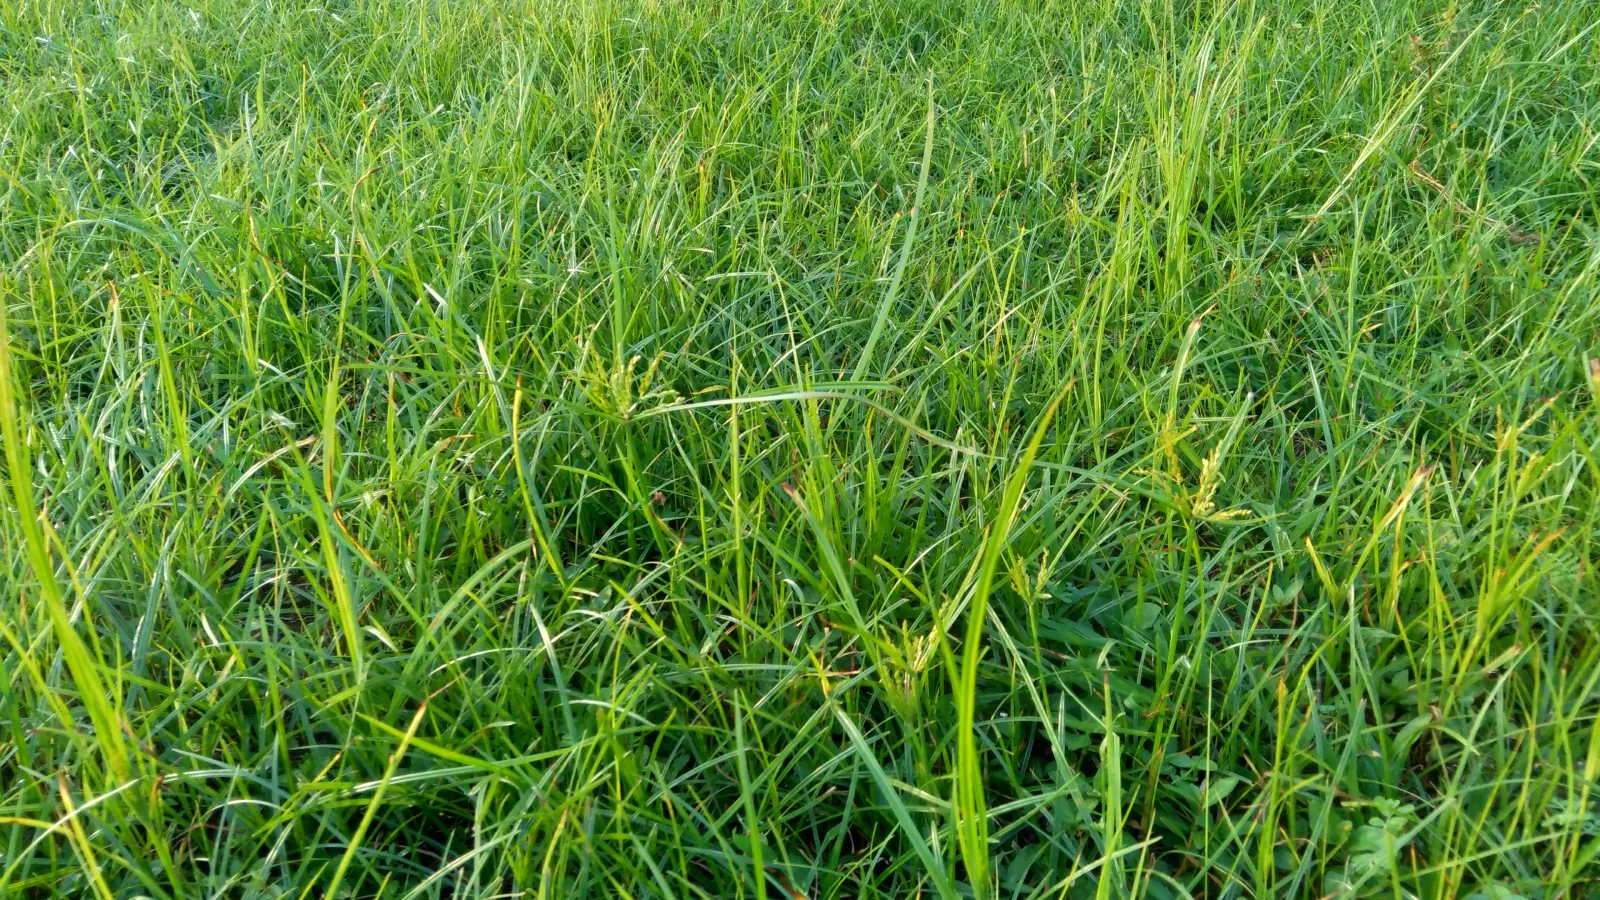 a close-up of some grass